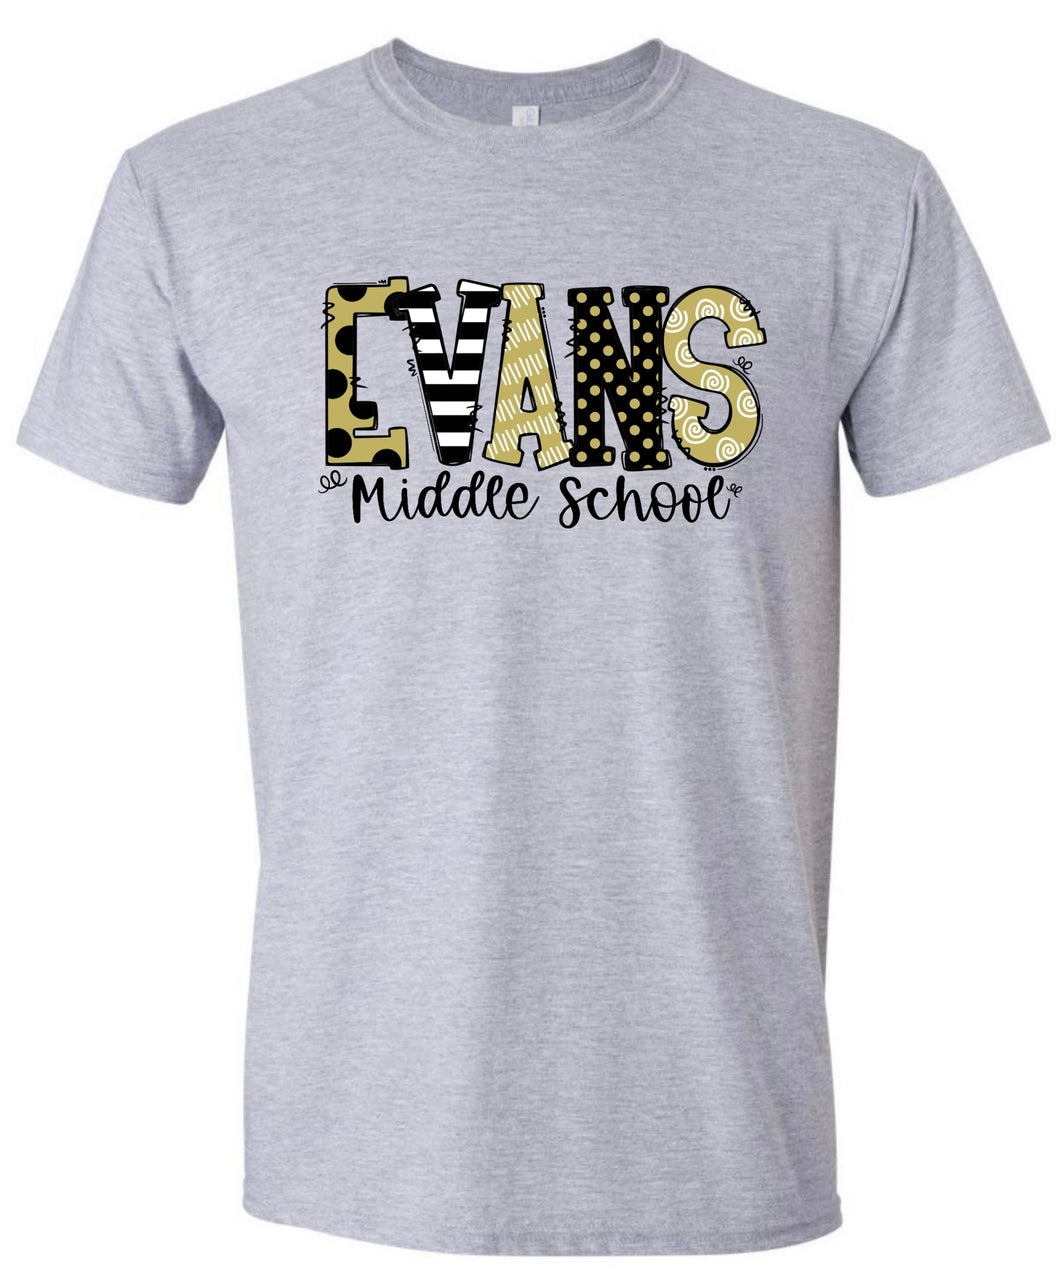 Evans Middle School Doodle Design Tshirt